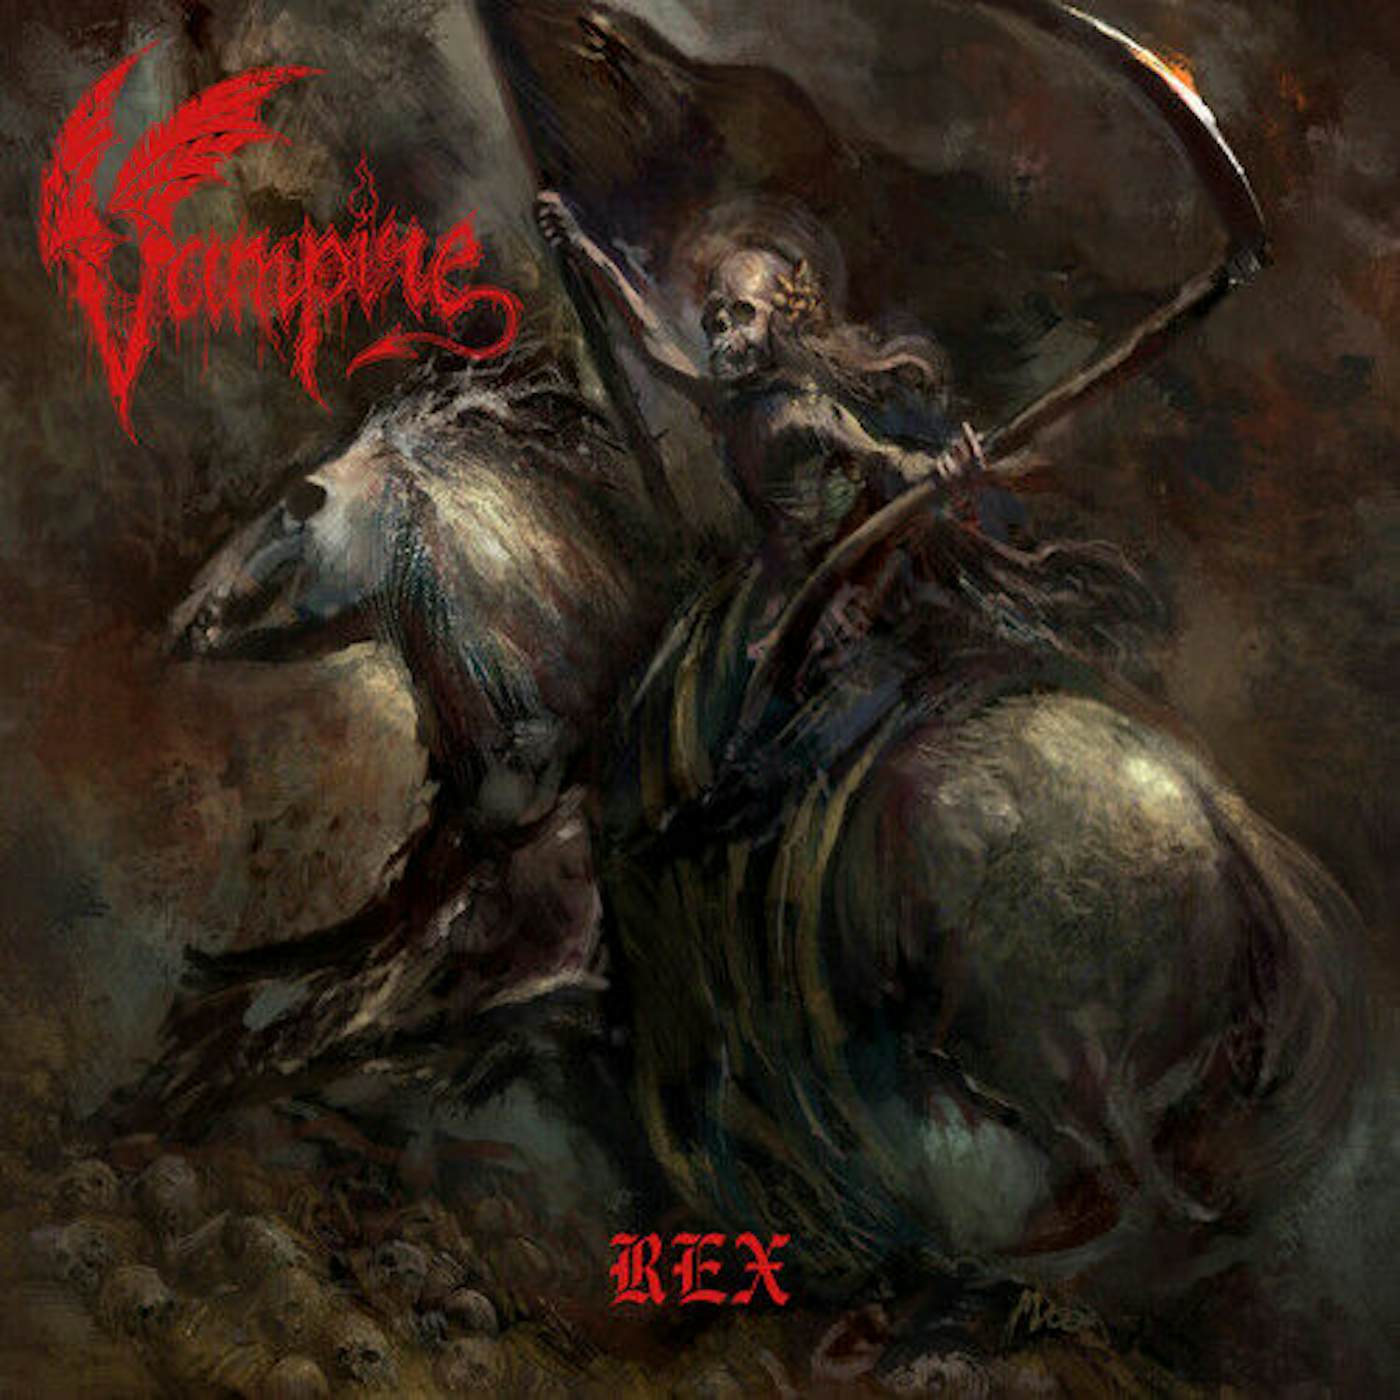 Vampire Rex Vinyl Record